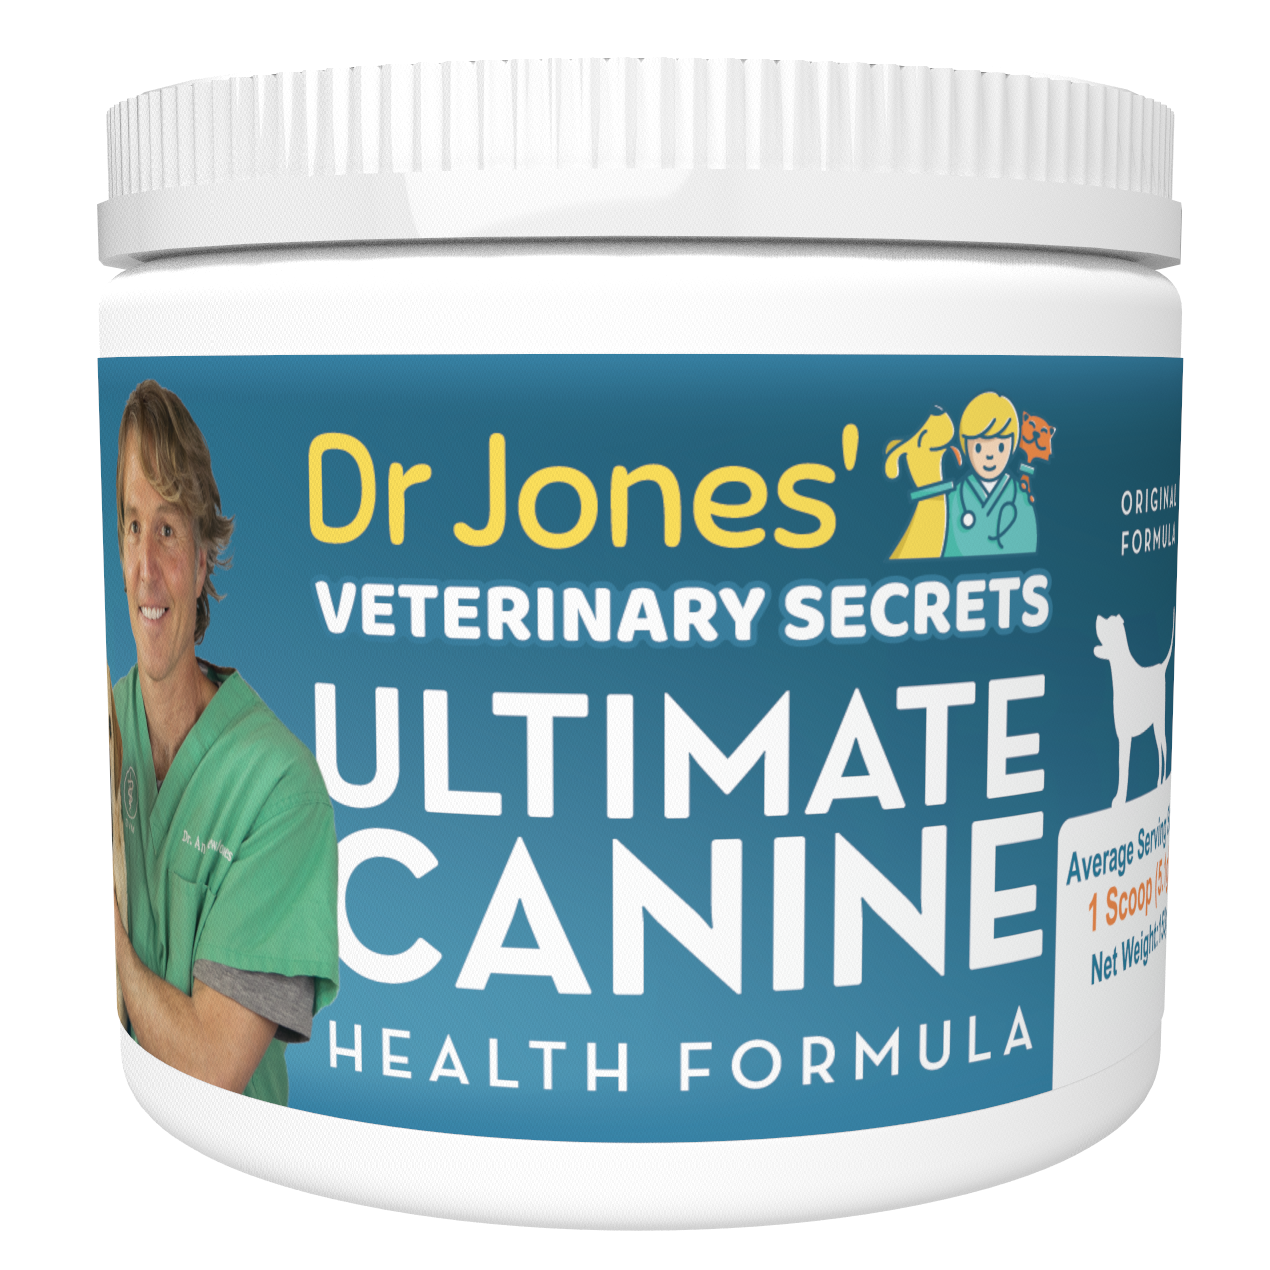 Dr. Jones' Ultimate Canine Original Formula Chicken Flavor Nutritional Supplement for Dogs